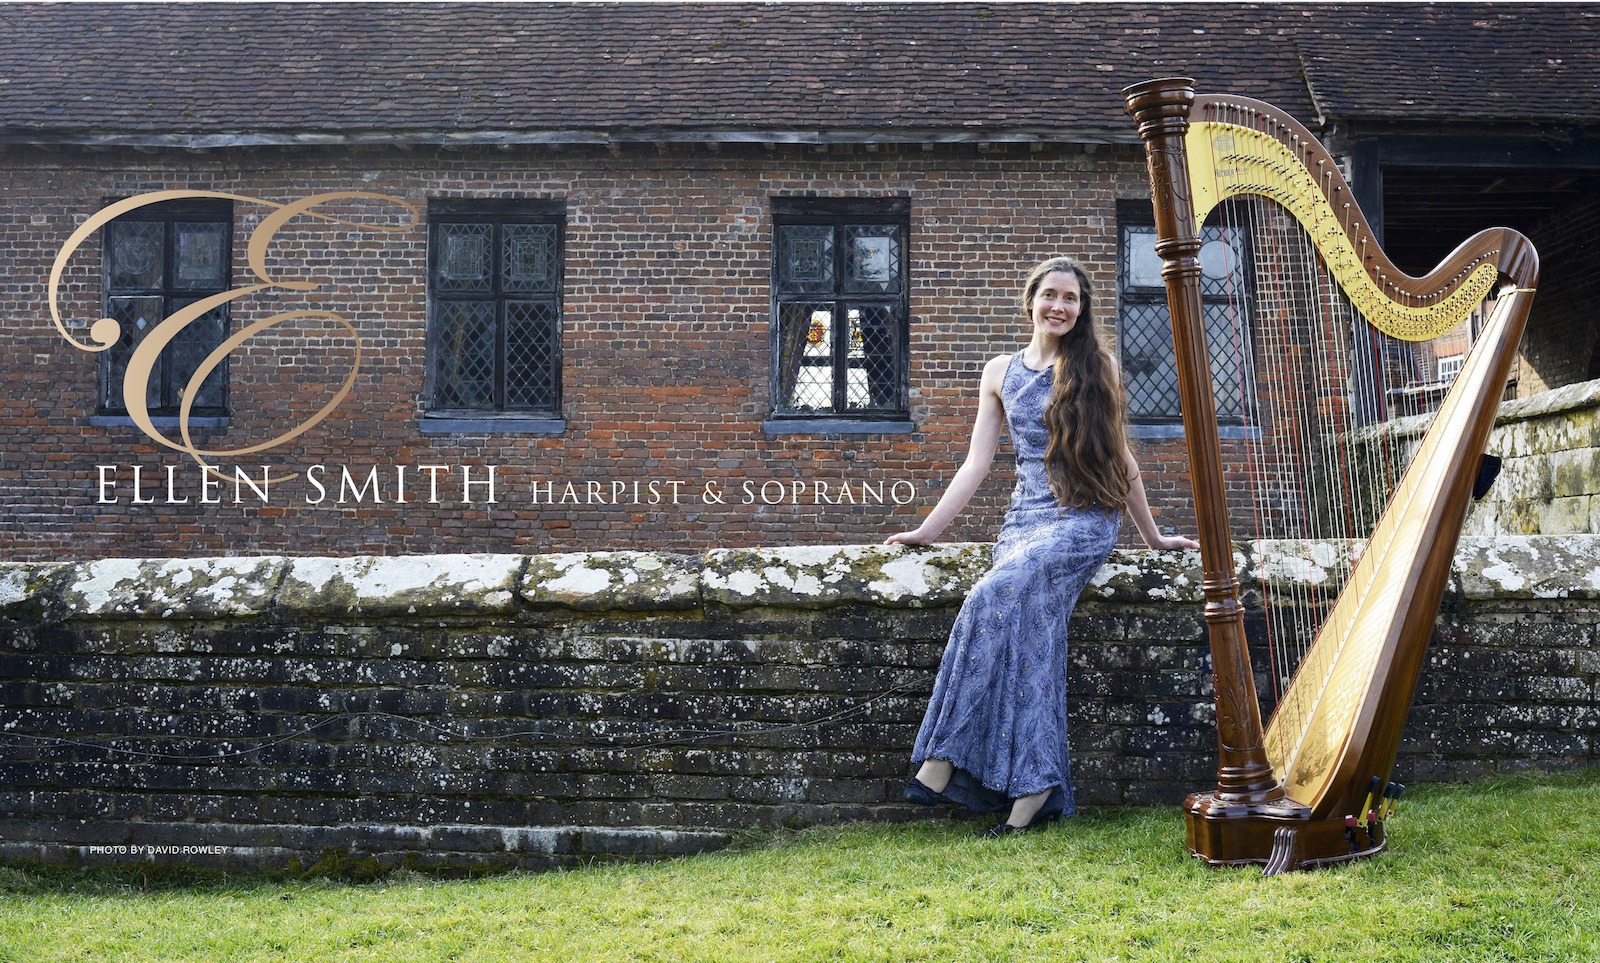 Ellen Smith, harpist and soprano